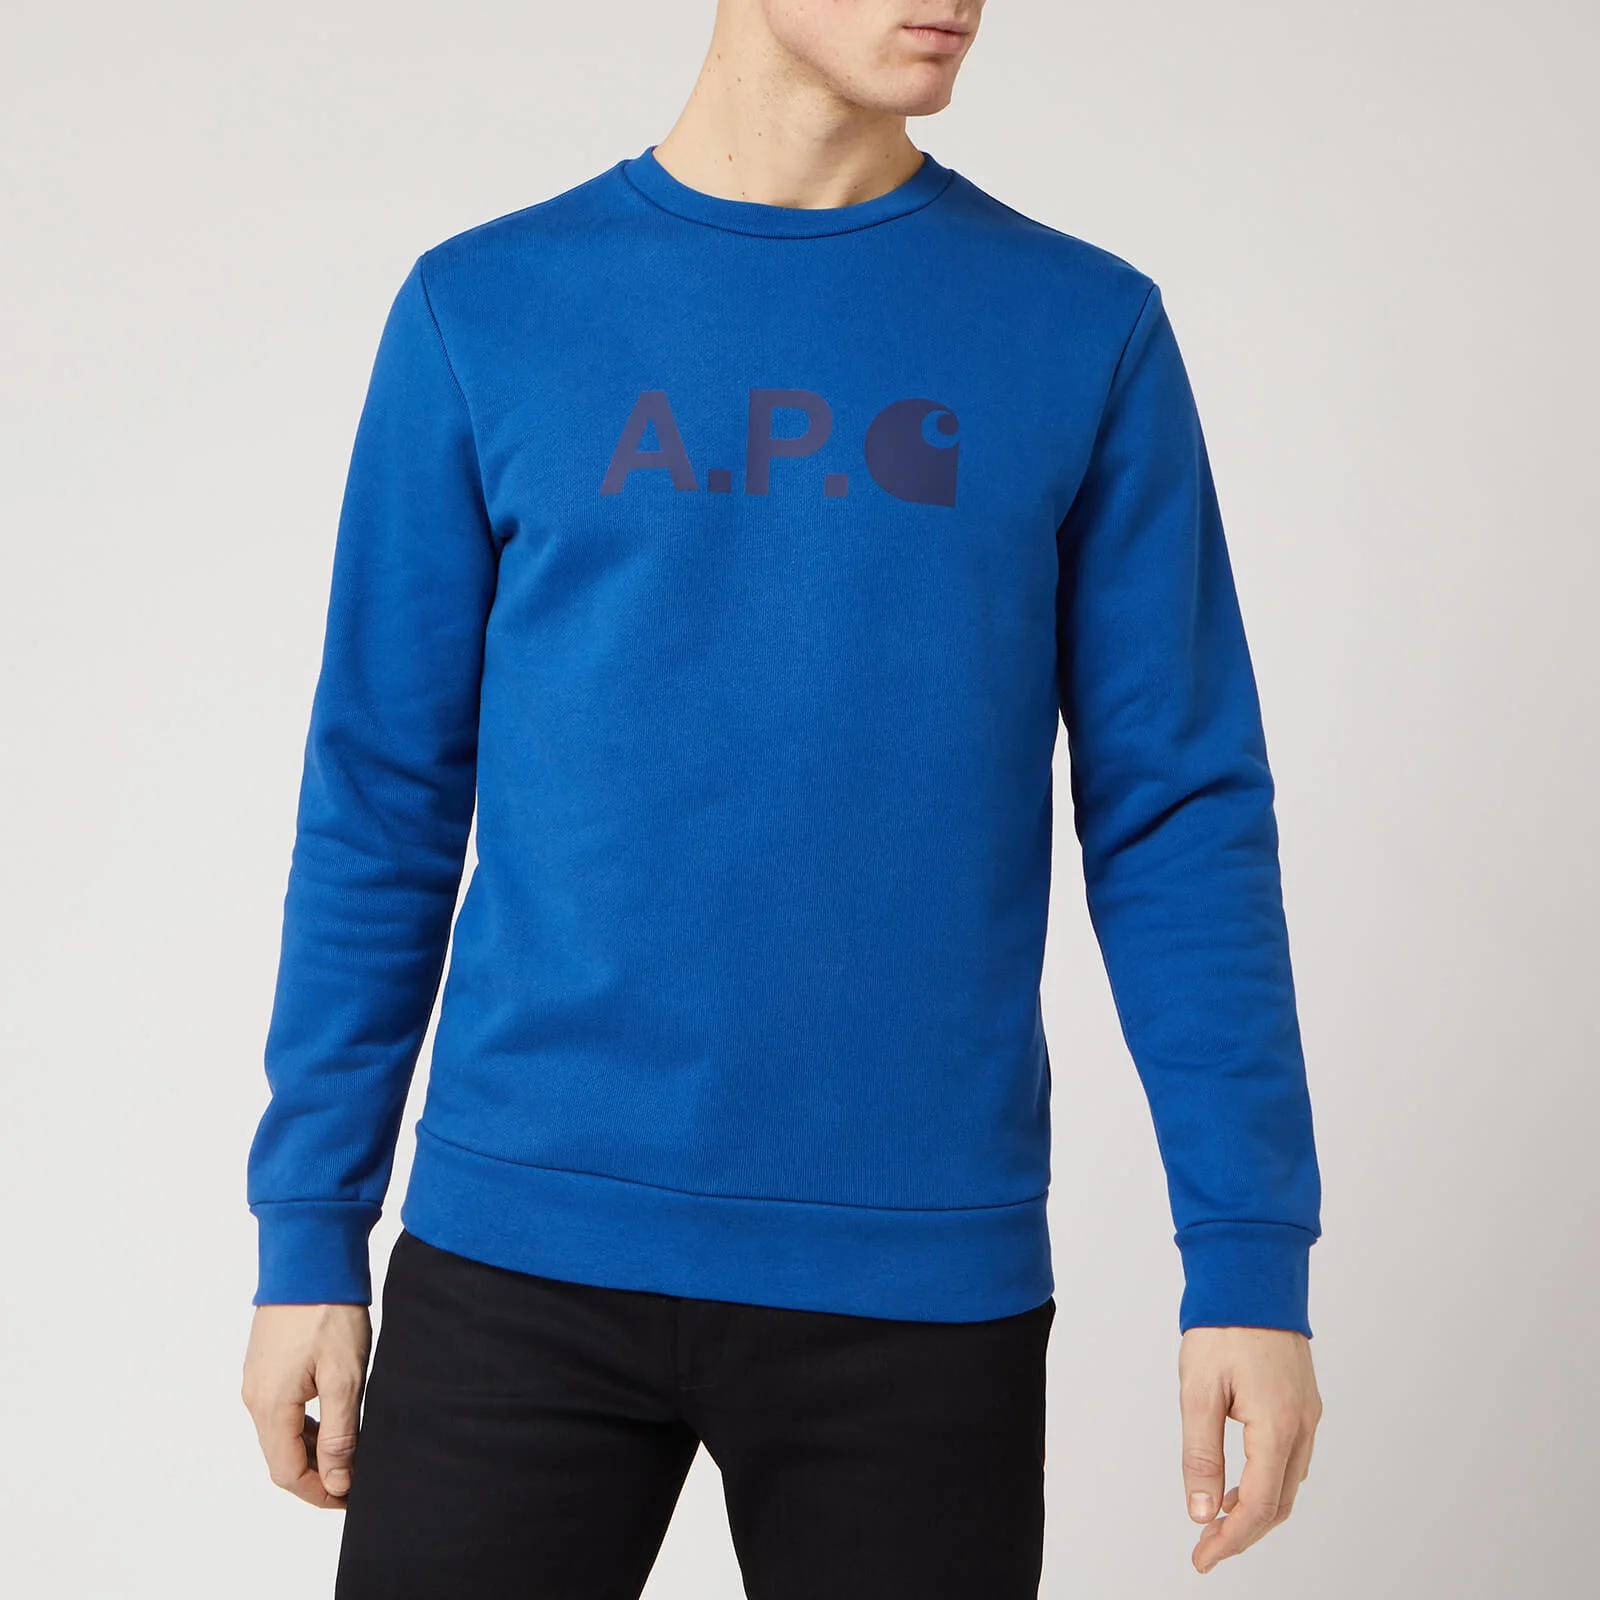 A.P.C. X Carhartt Men's Ice H Sweatshirt - Bleu Roi Image 1